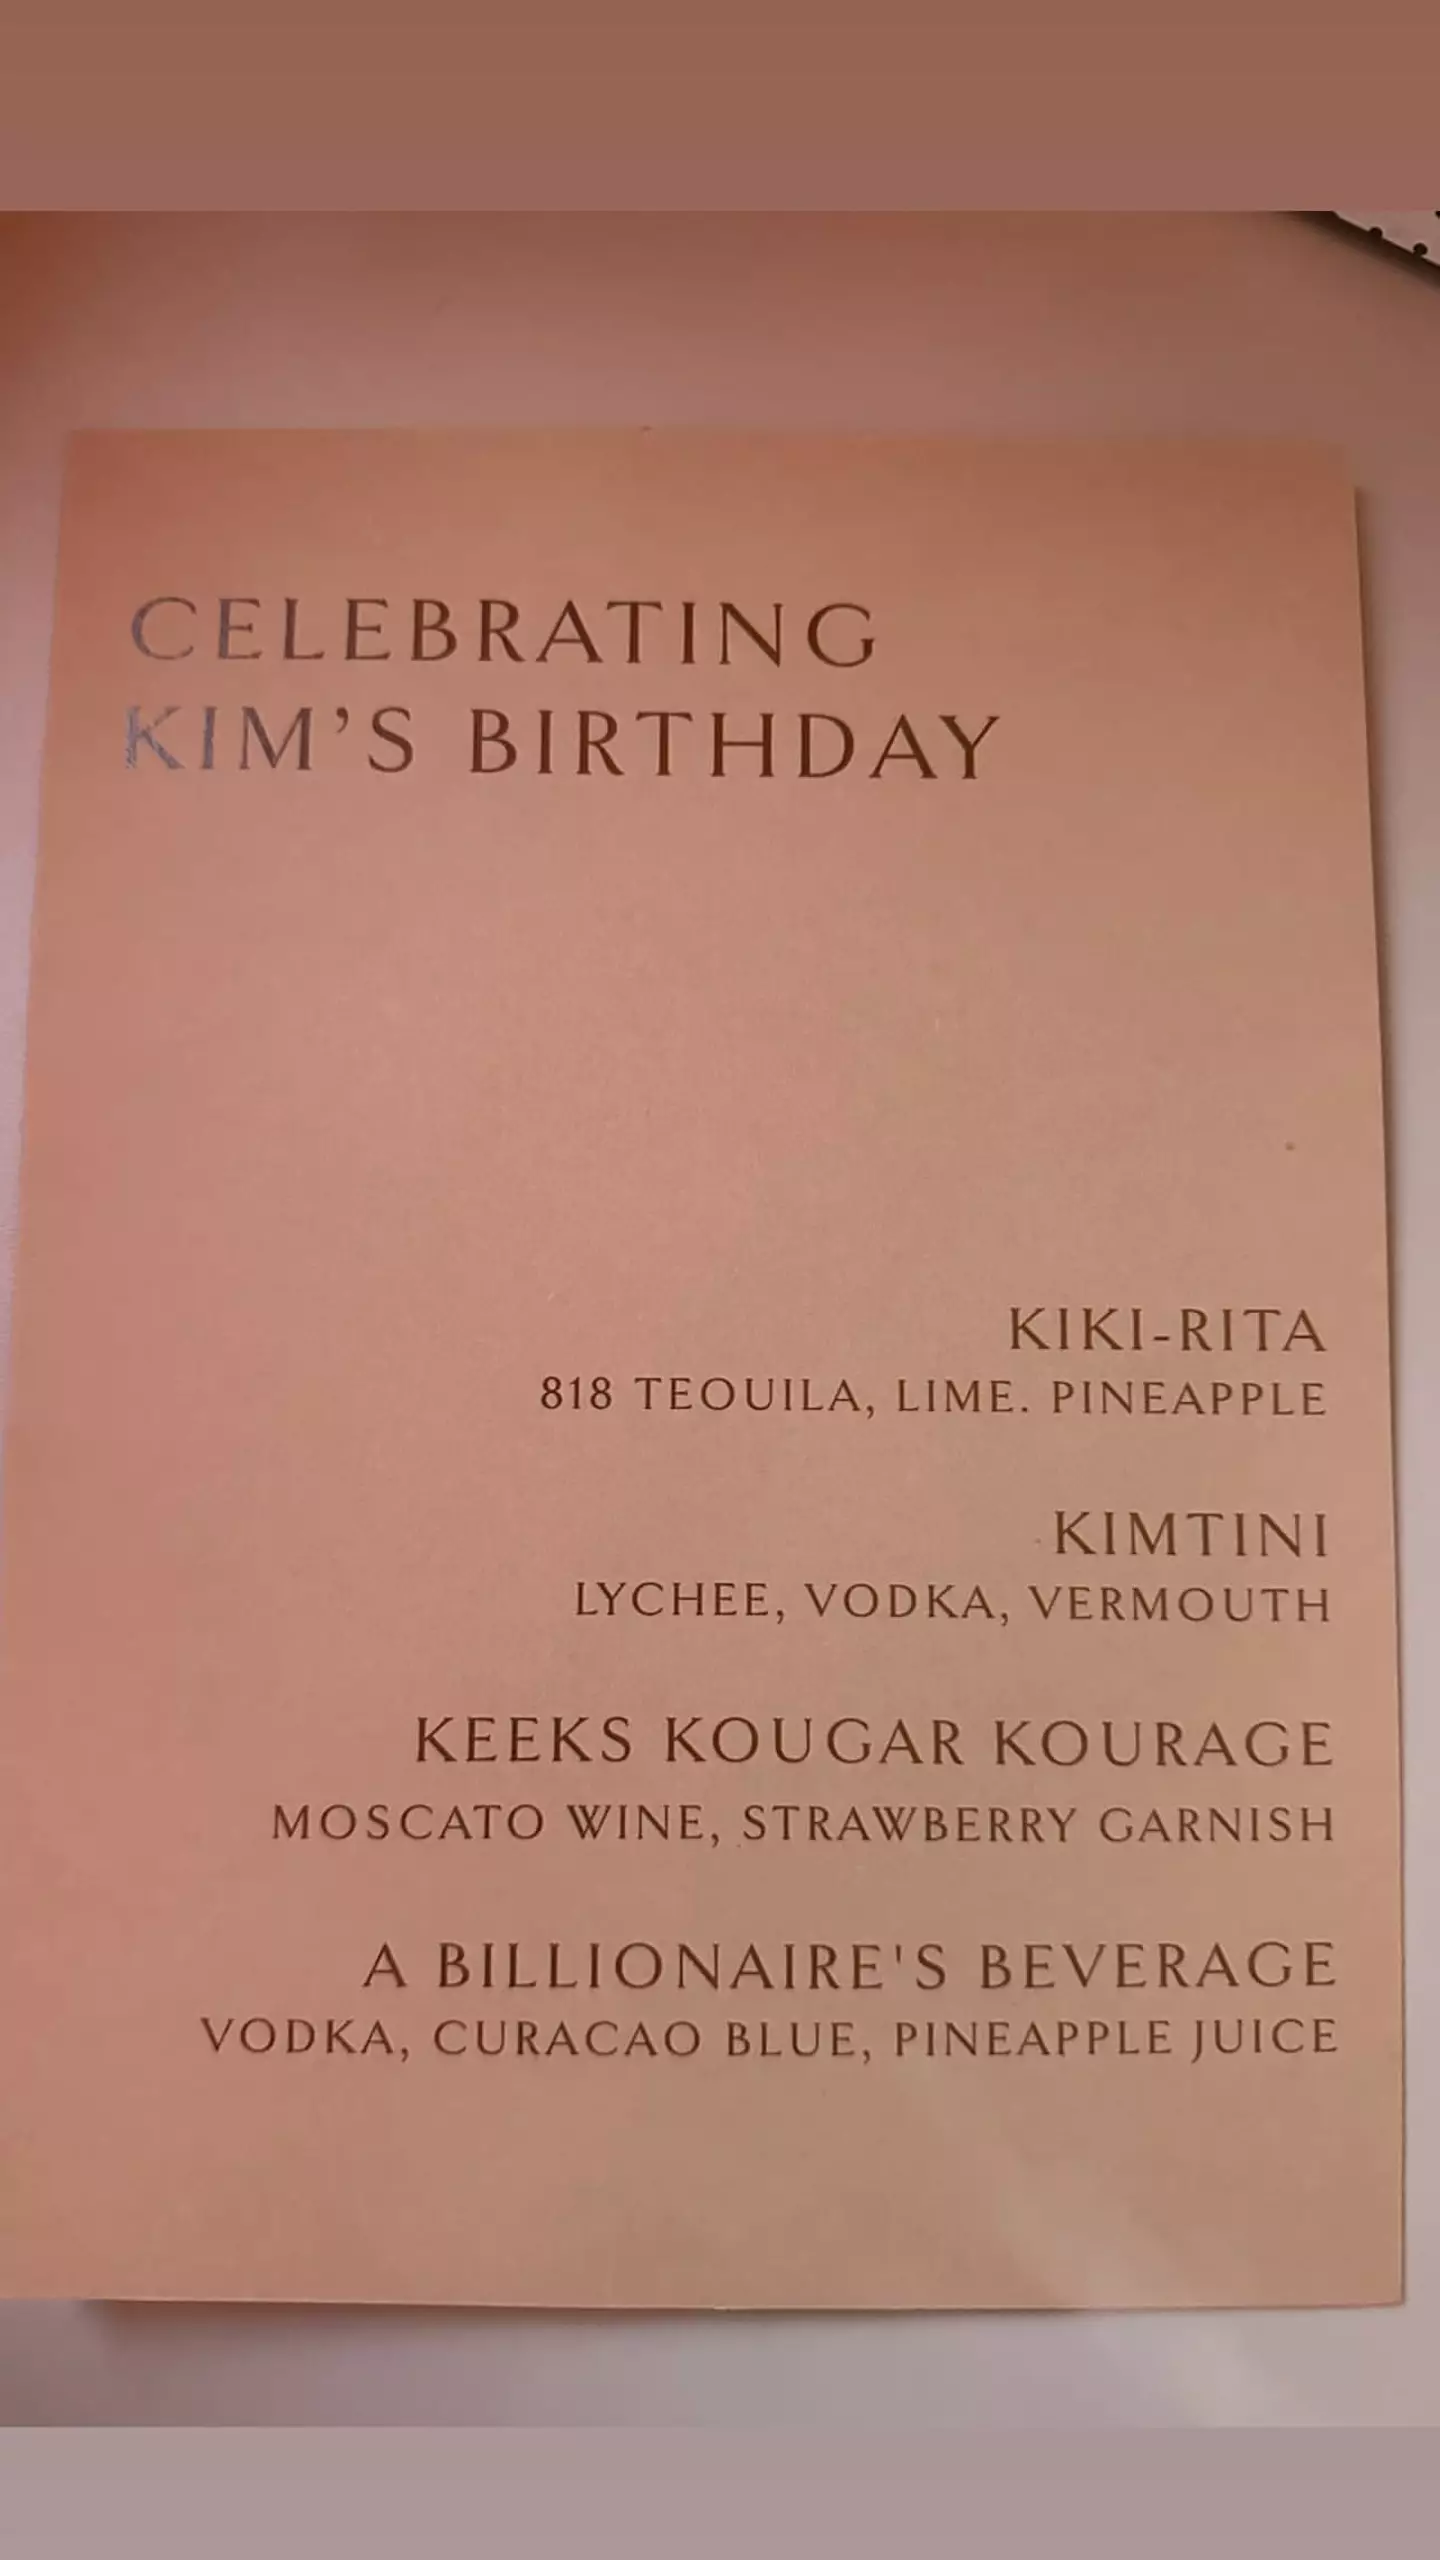 They had a bespoke cocktail menu on board. Mine's a Kim-Tini!